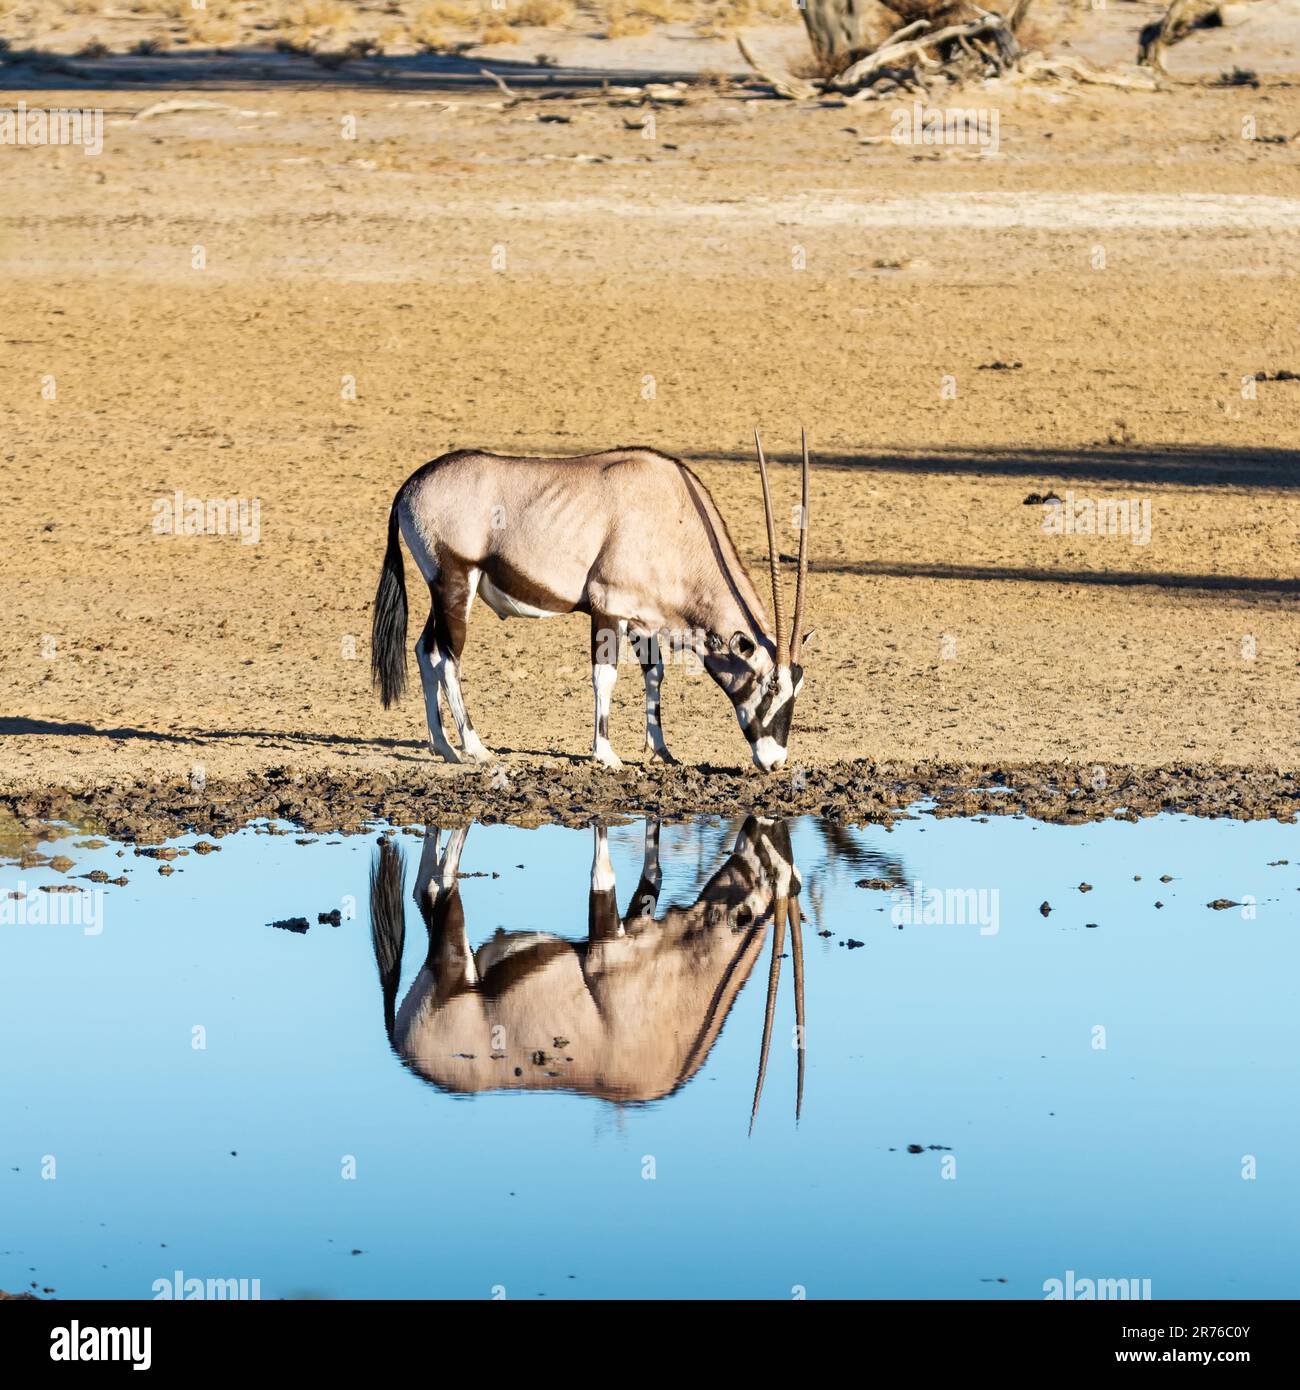 Gemsbok antelope in Southern African Kalahari savannah Stock Photo